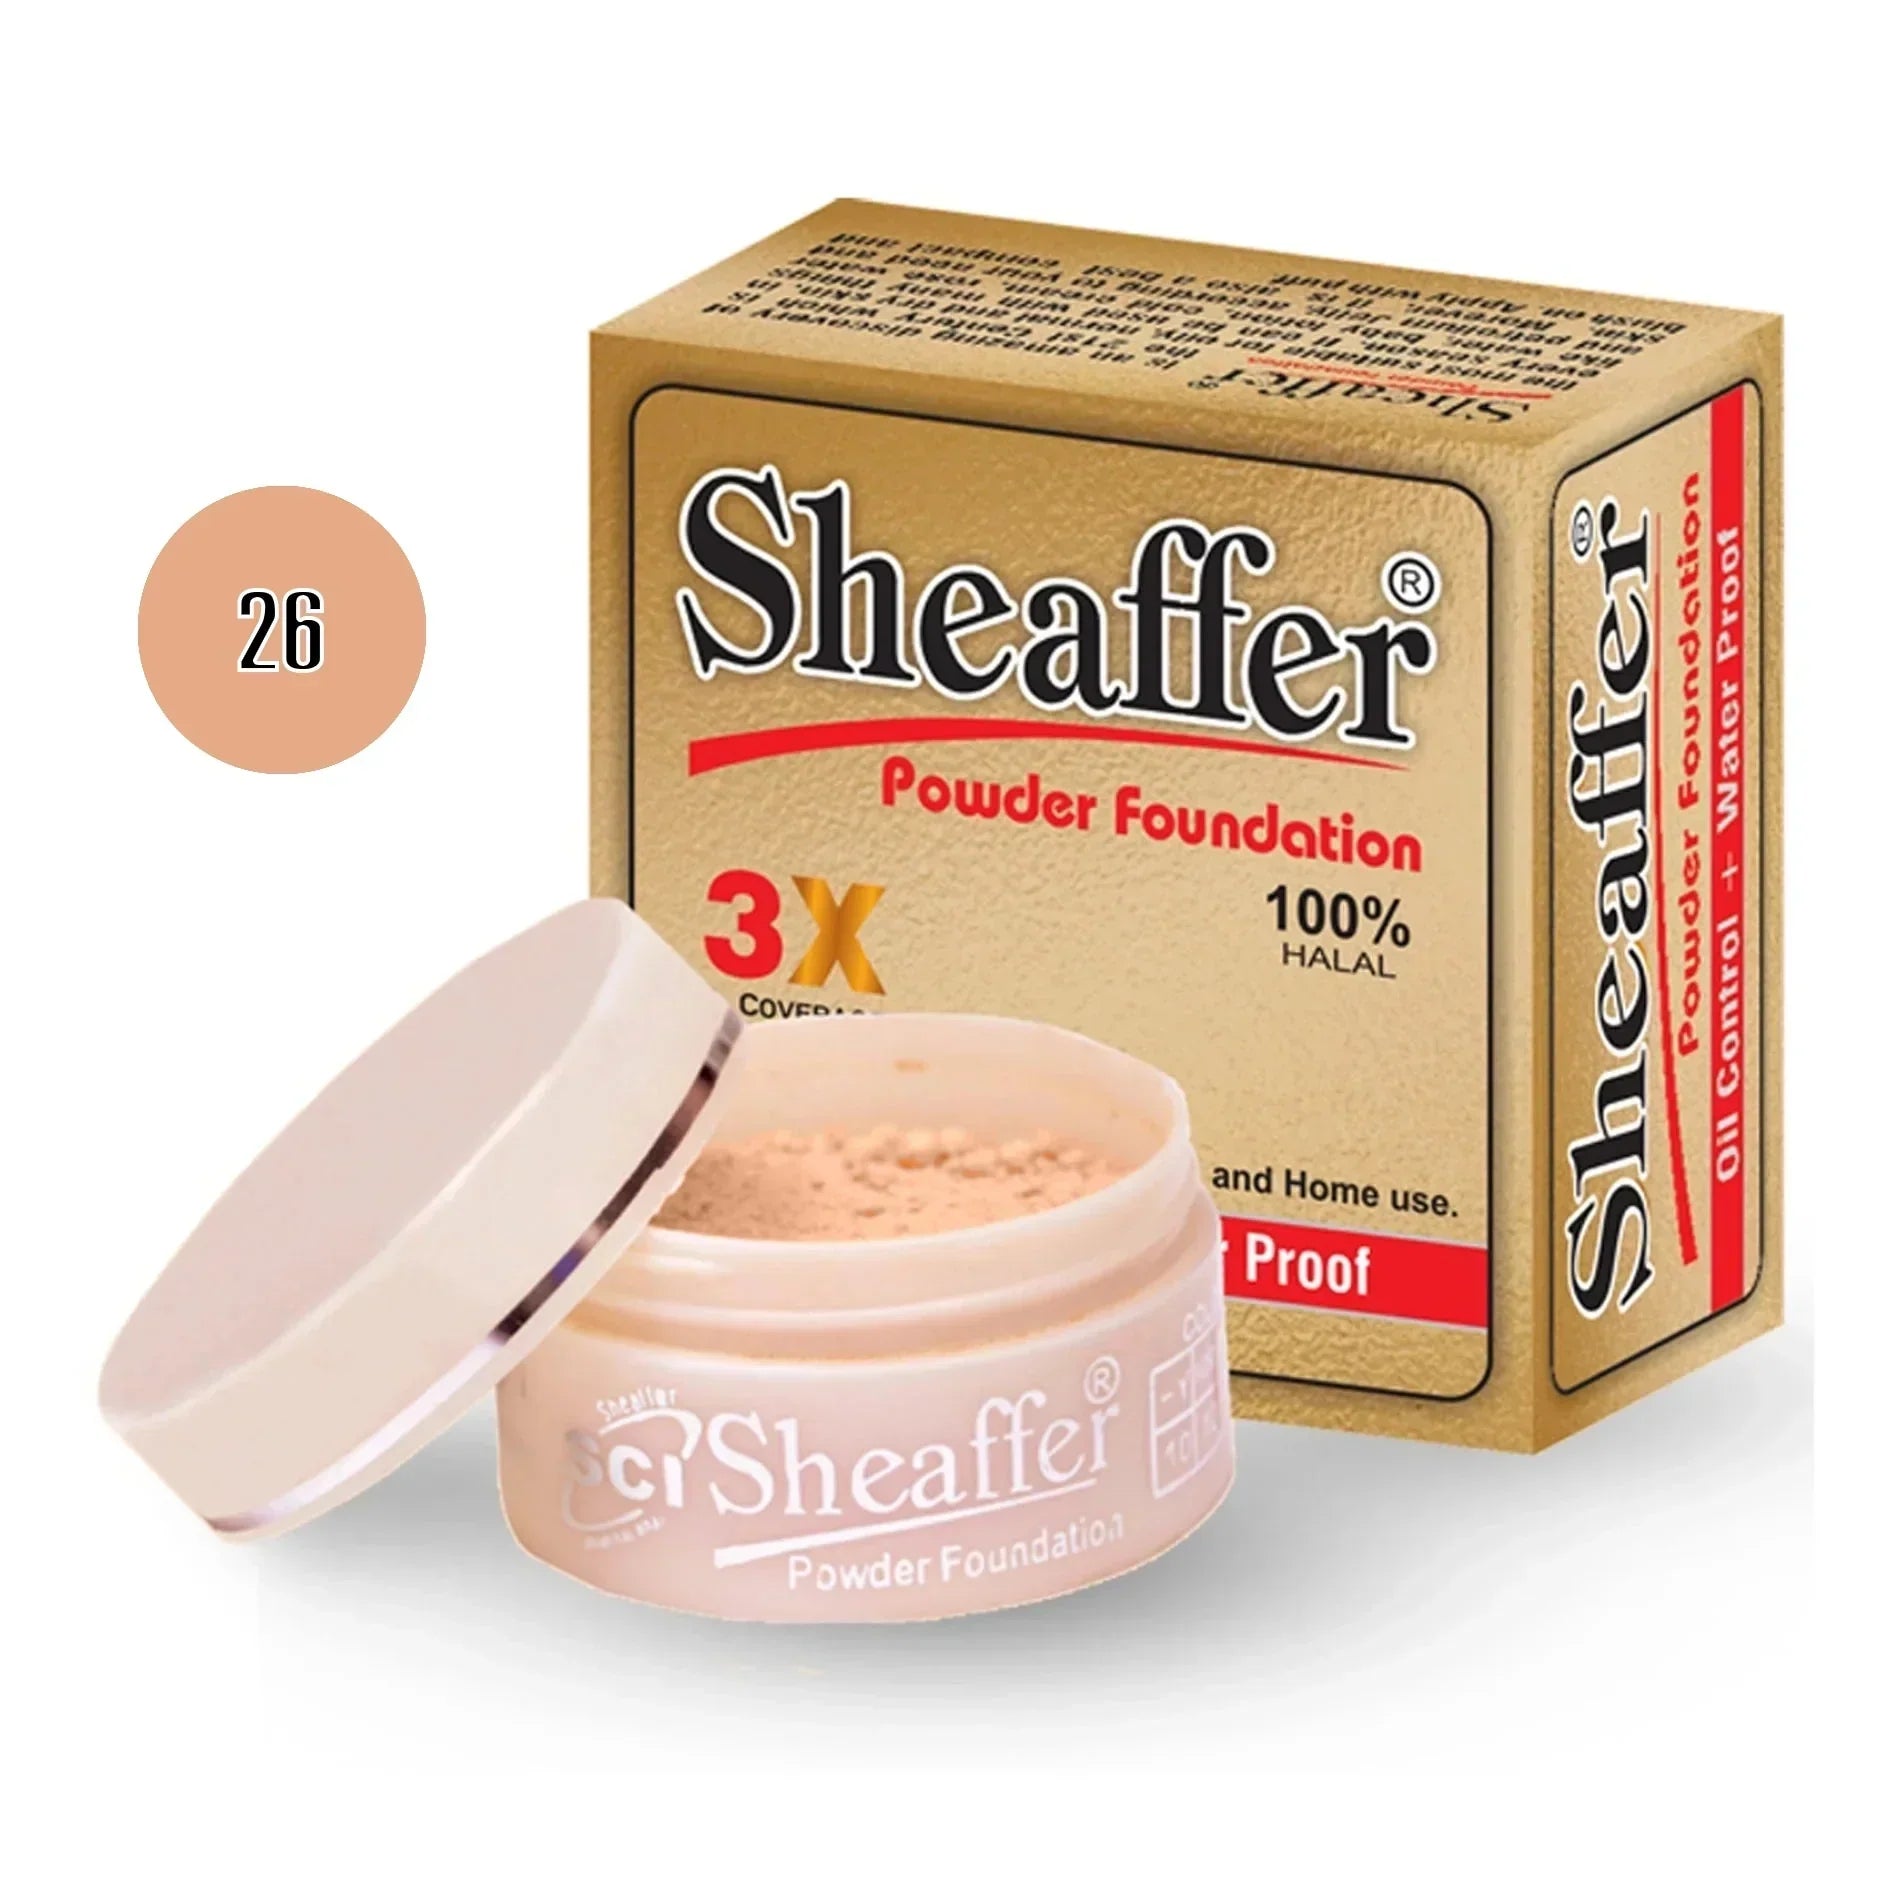 Sheaffer Powder Foundation Base P4 Shade - Retailershop - Online Shopping Center